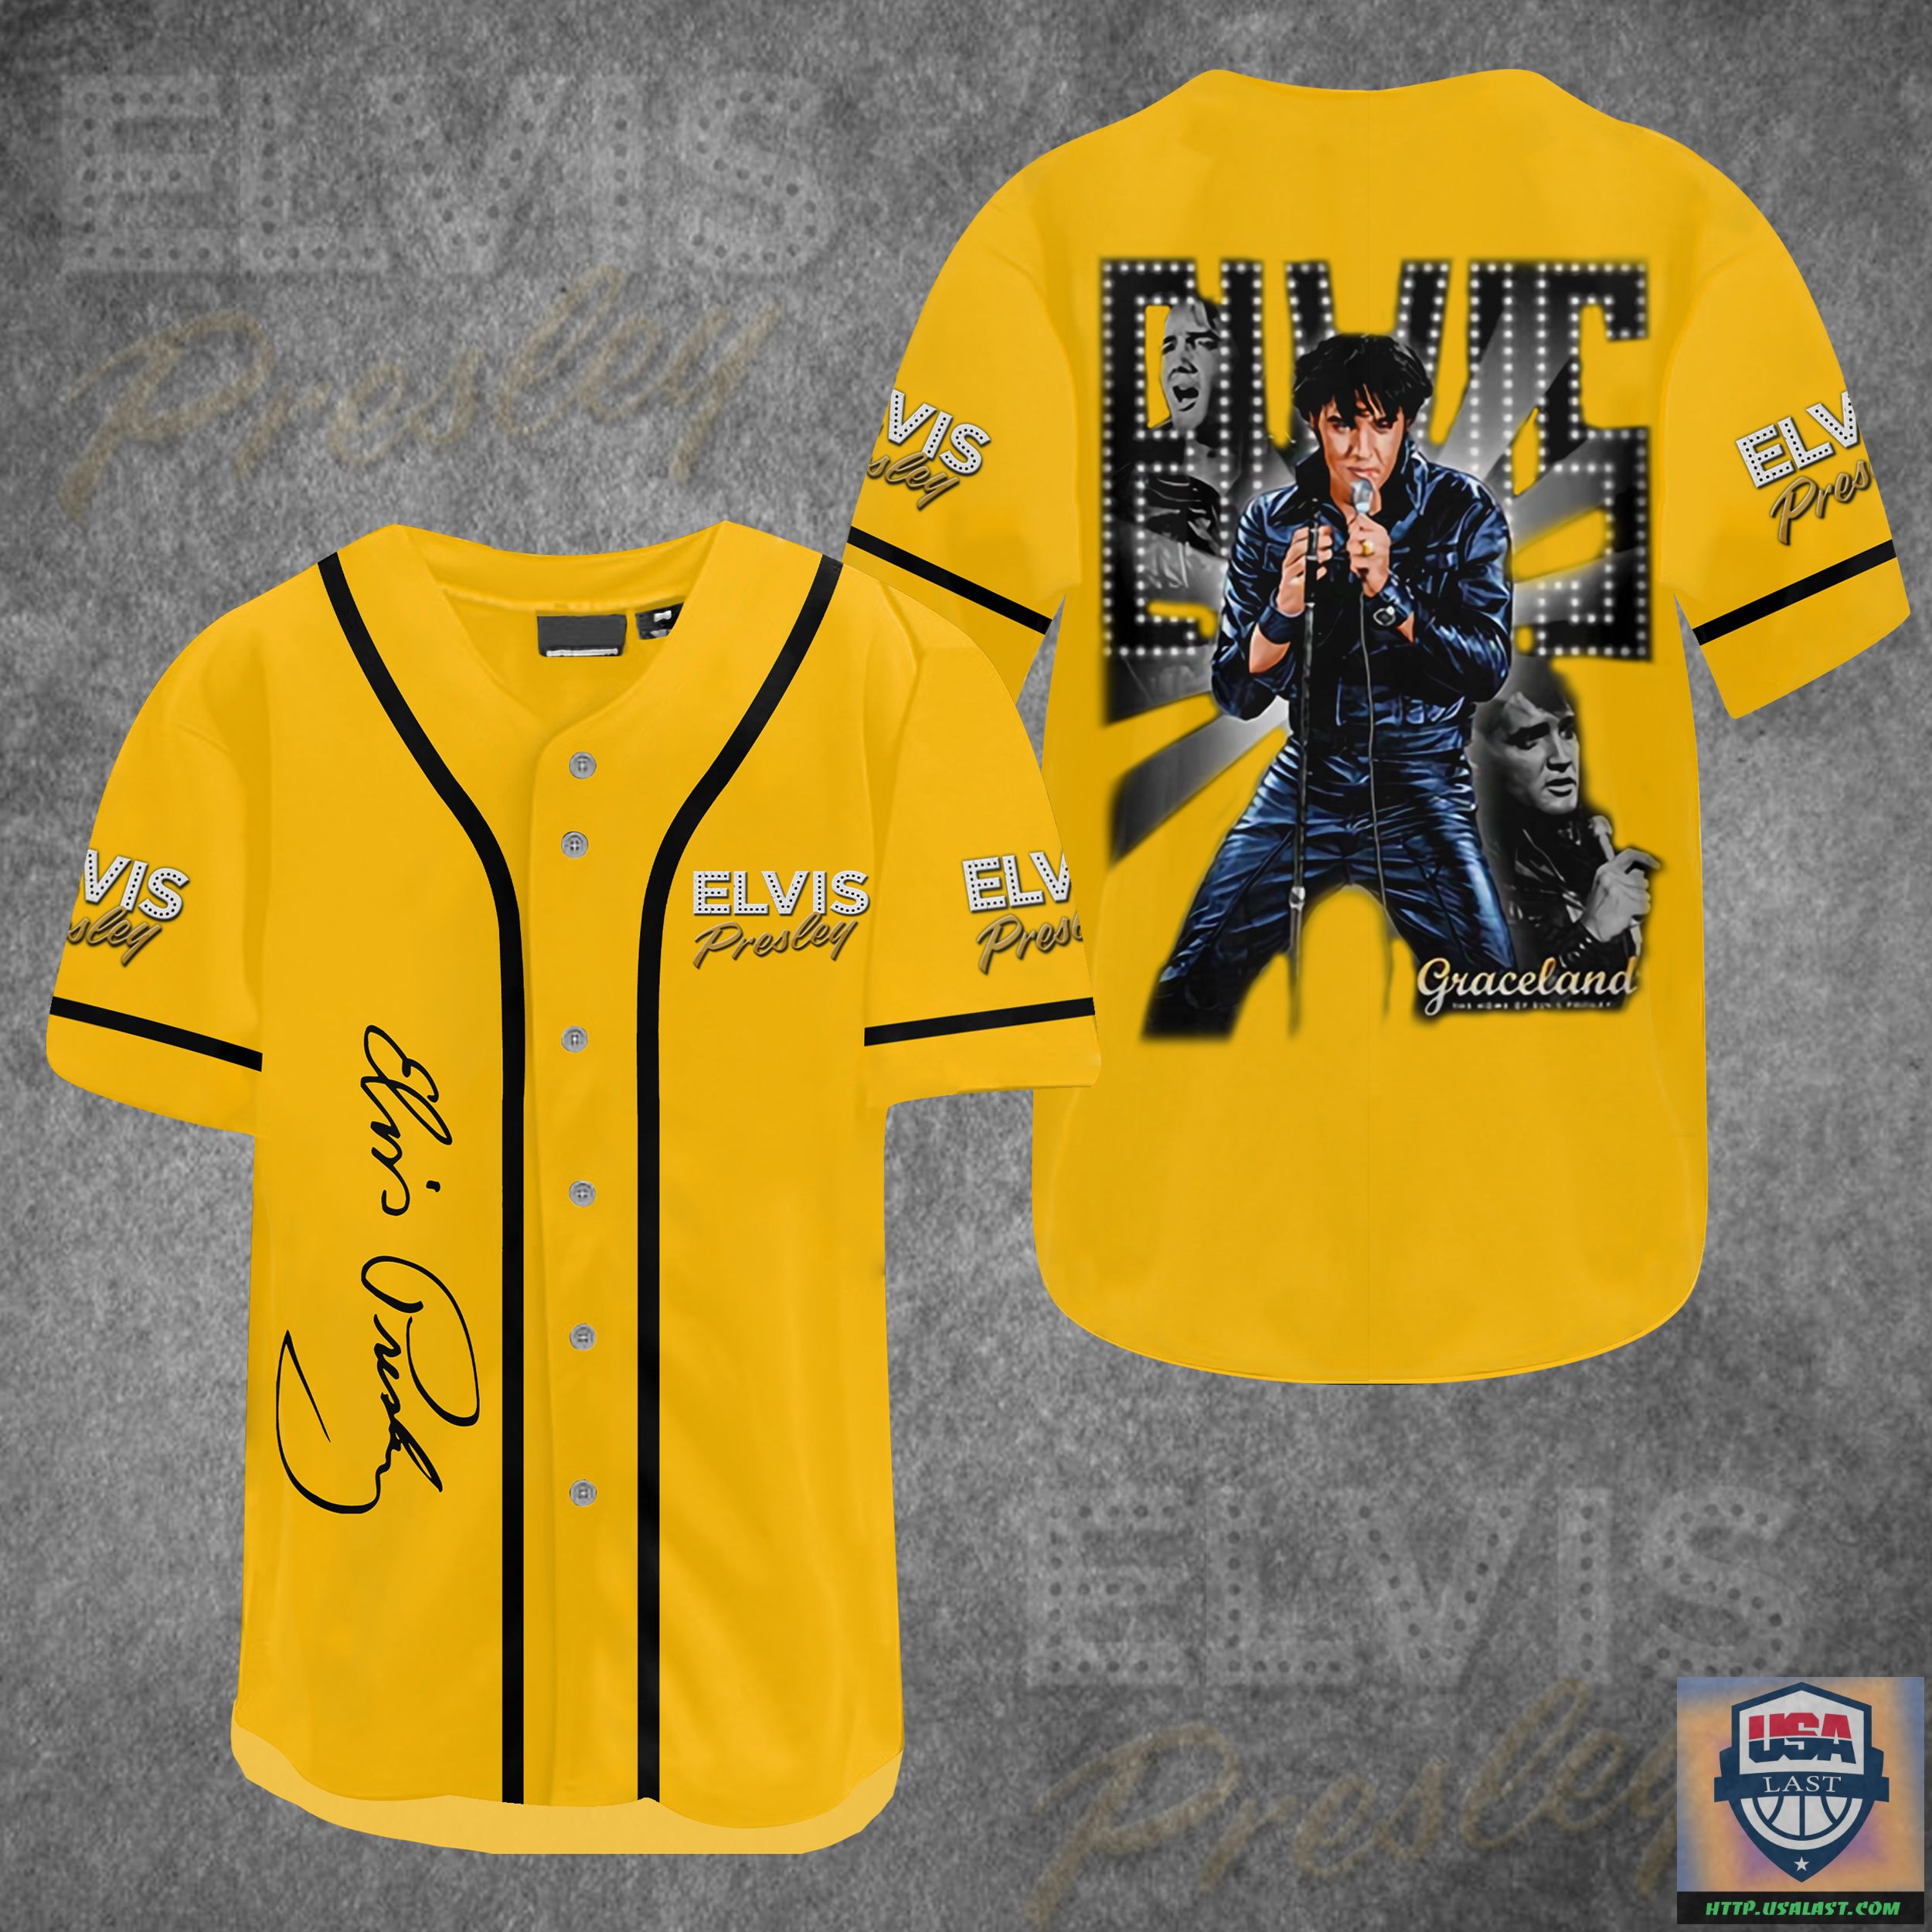 52ihOnNS-T220722-33xxxElvis-Presley-Yellow-Baseball-Jersey-Shirt.jpg